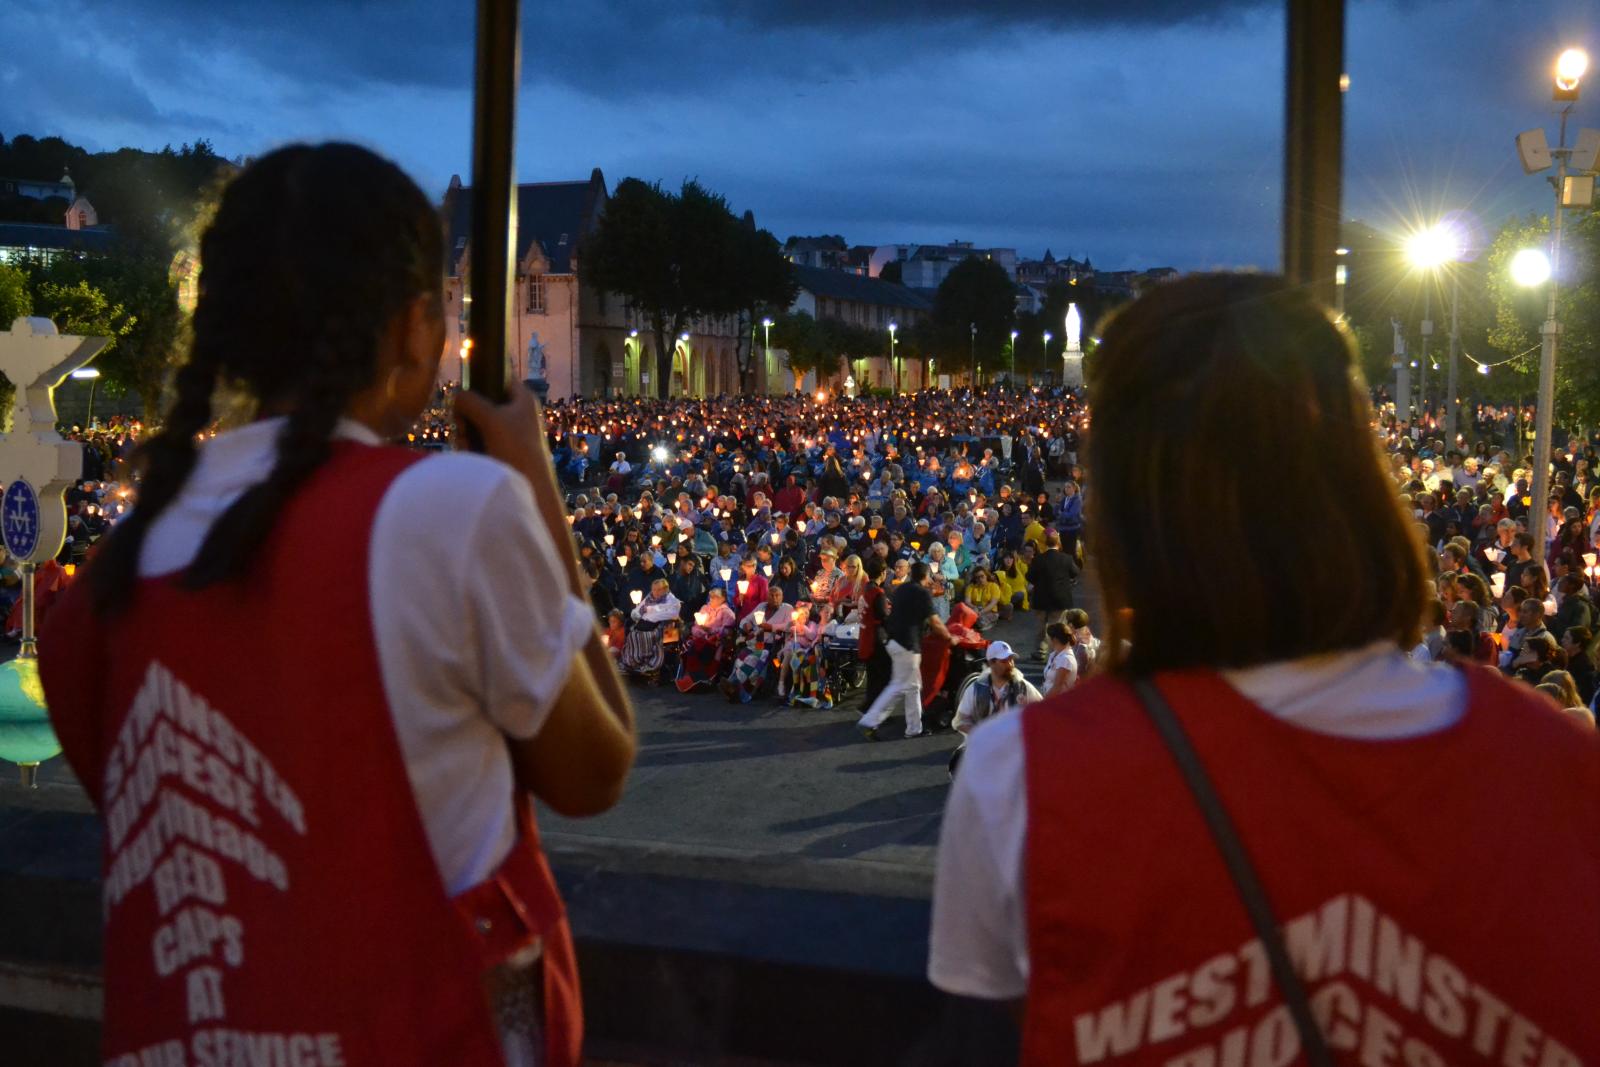 Fundraising for the Lourdes Pilgrimage